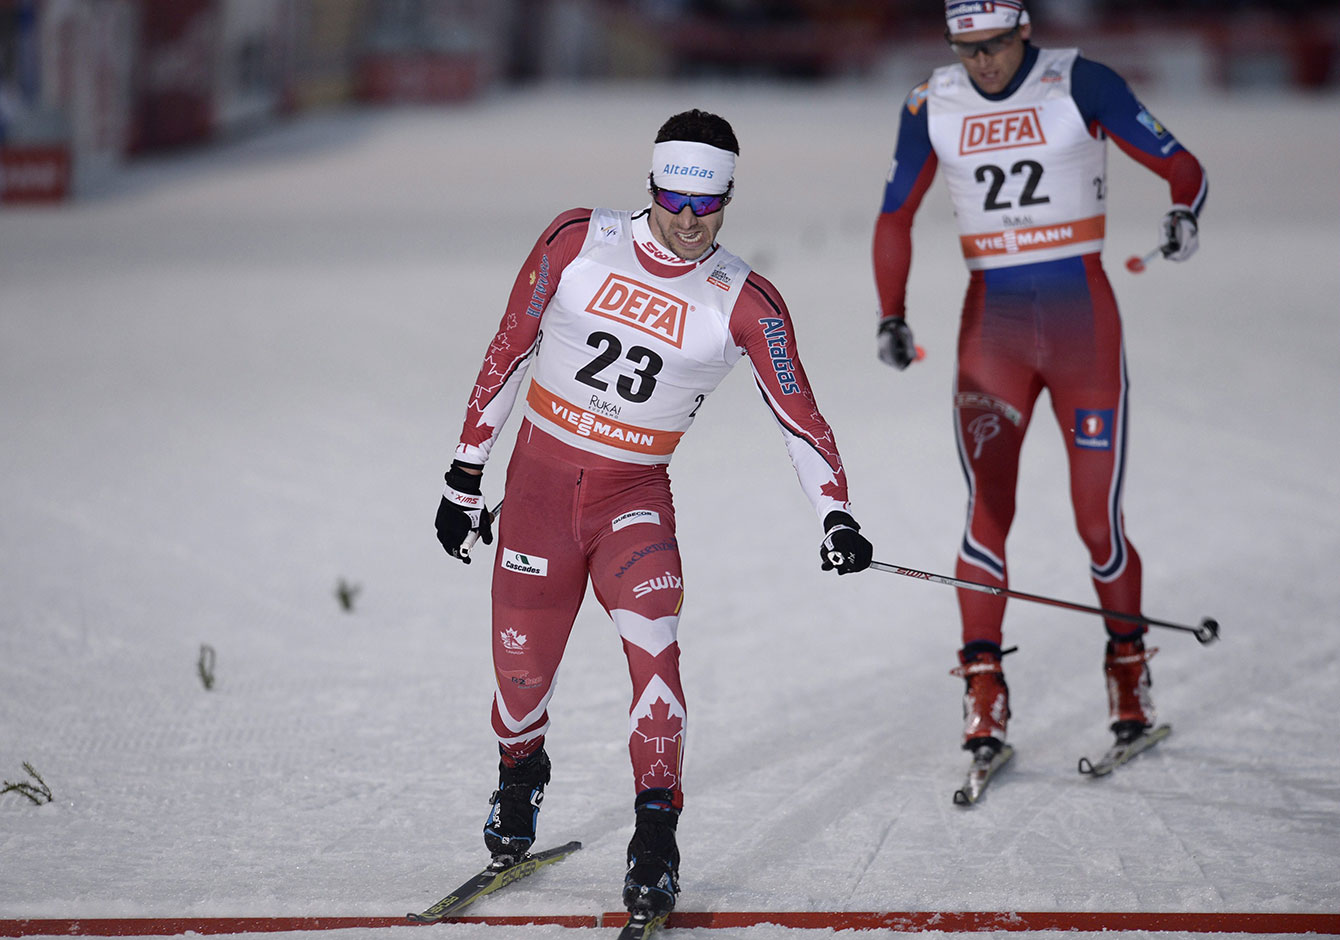 Alex Harvey edges Dario Cologna of Switzerland in Kuusamo, Finland to win World Cup skate-ski silver on November 28, 2015. 